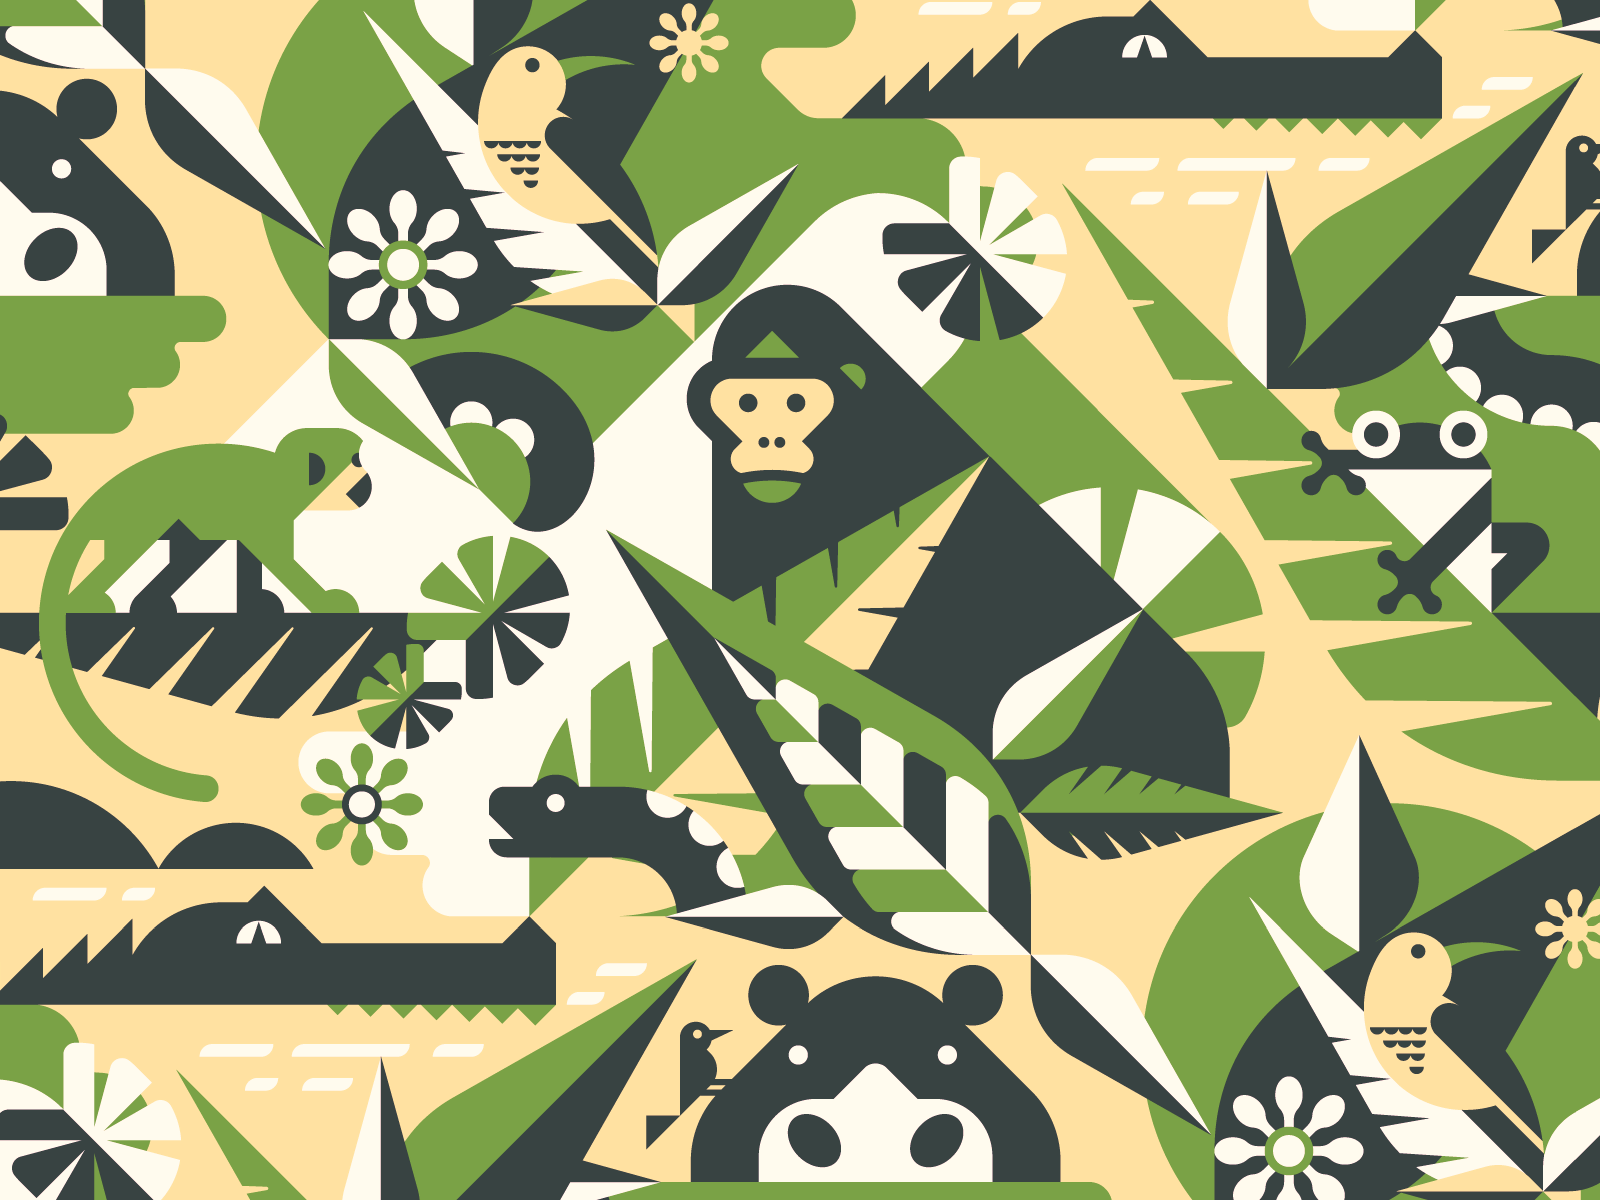 African Jungle Animals Pattern by Alexey Boychenko on Dribbble